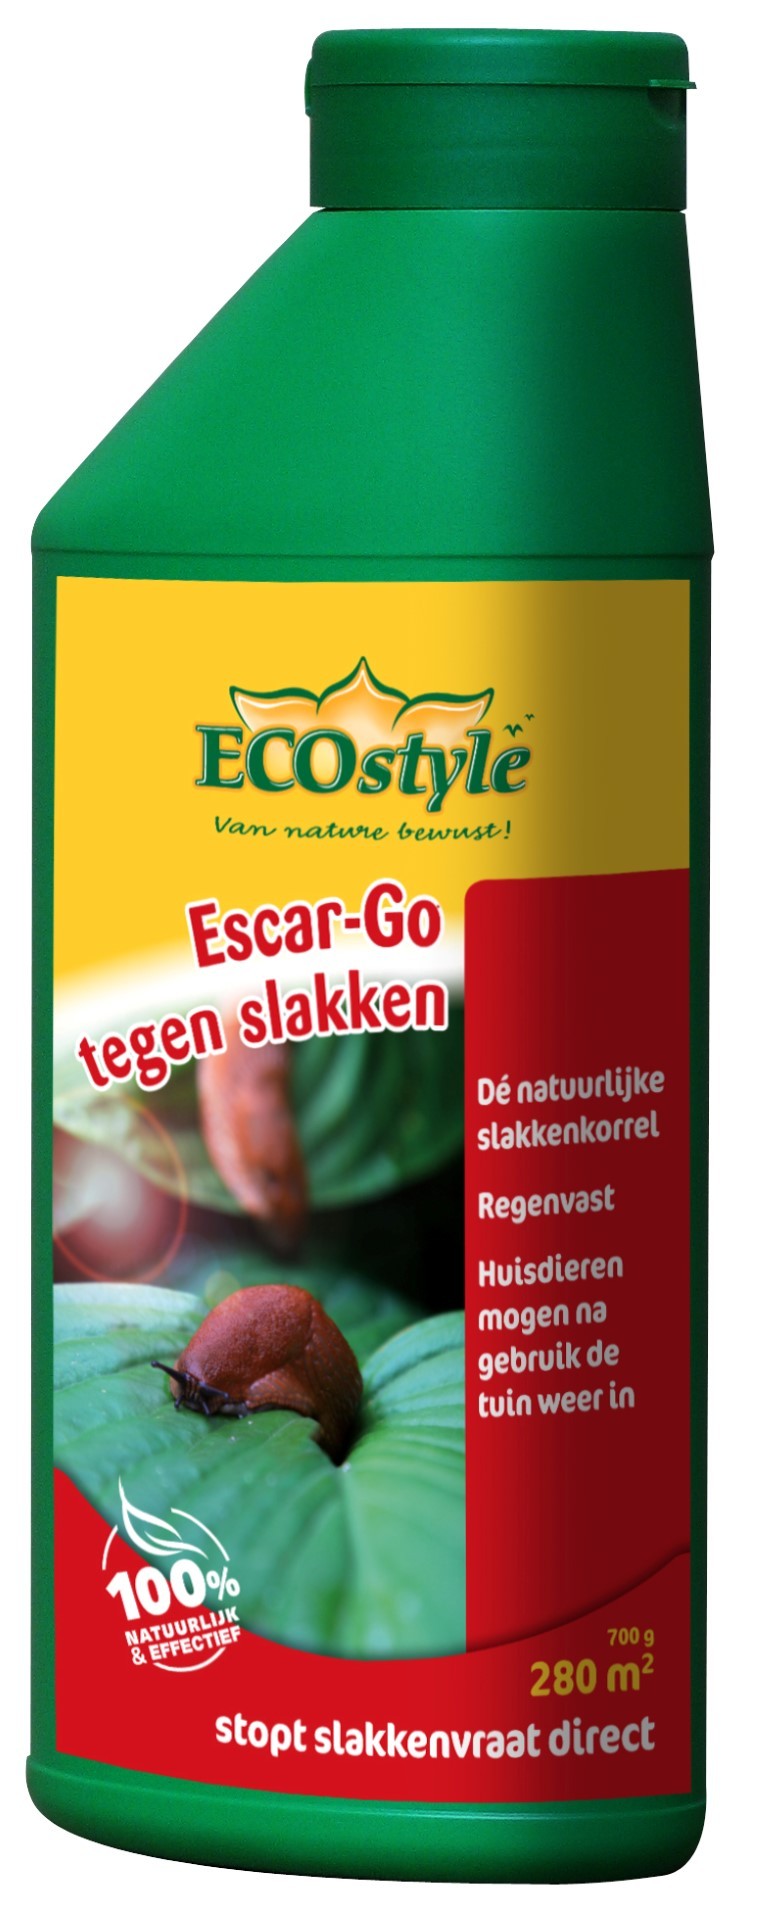 ECOStyle Escar Go strooikoker 700 g